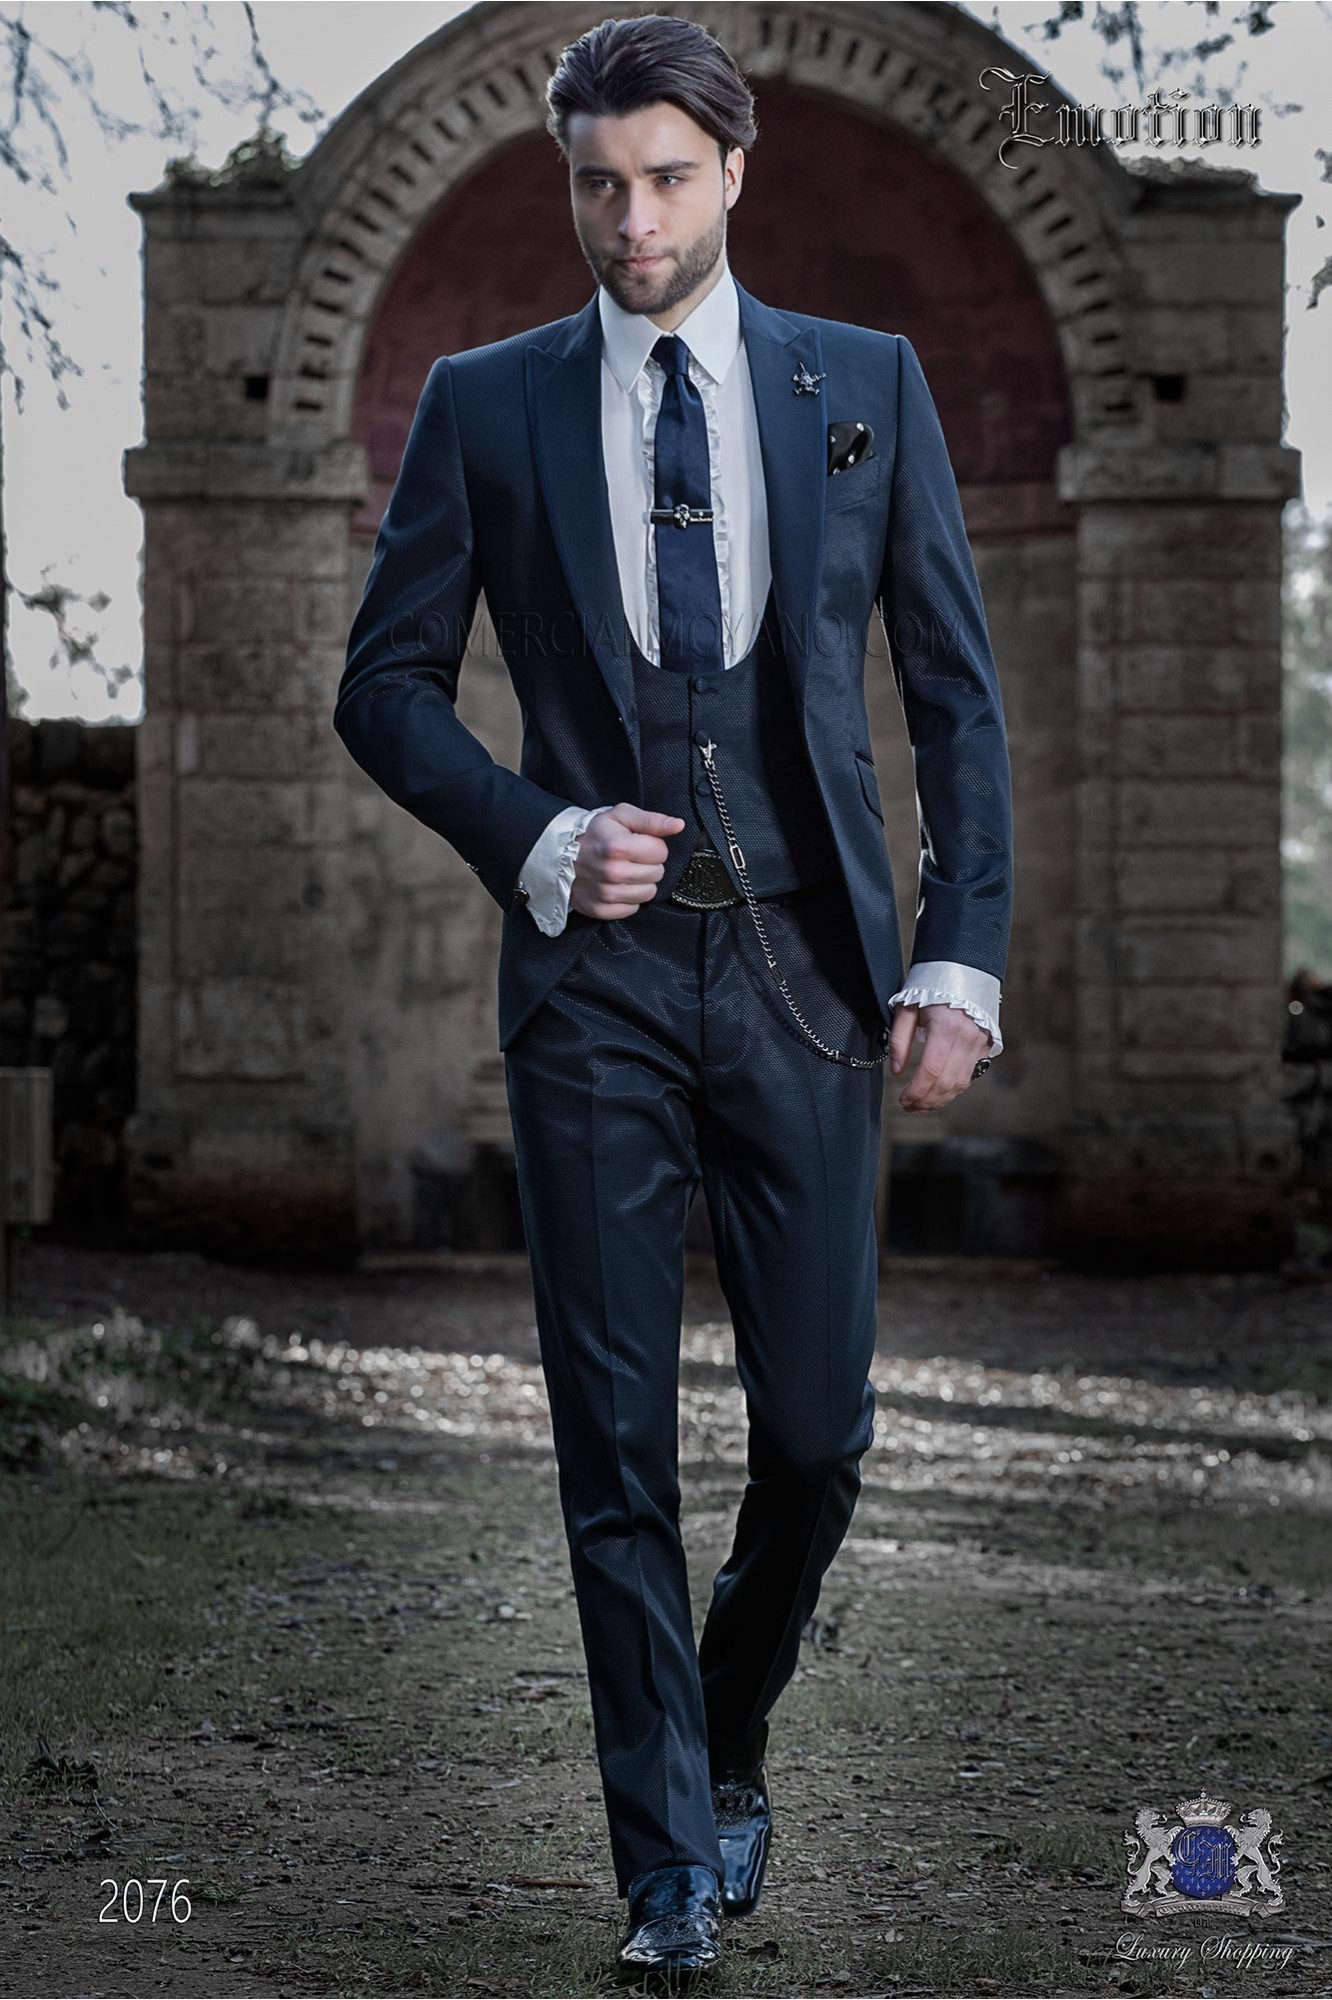 Italian wedding suit with slim stylish cut. New performance fabric